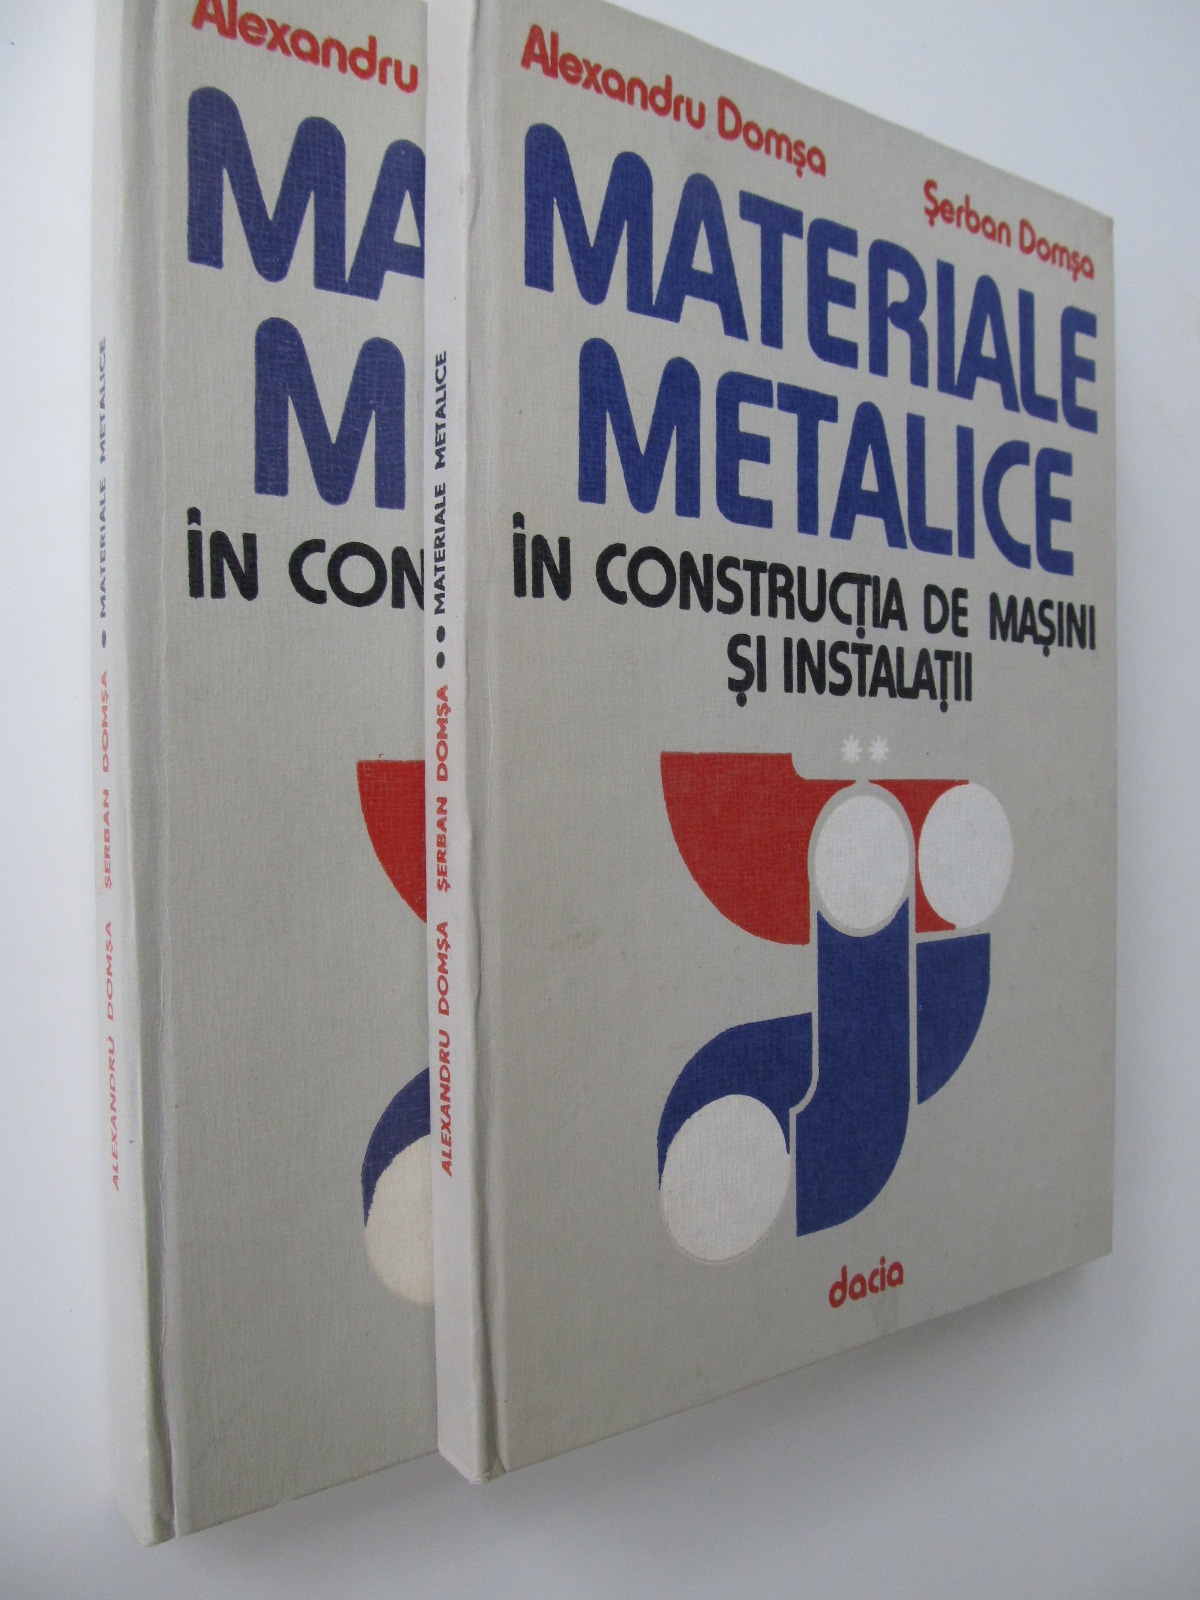 Materiale metalice in constructia de masini si instalatii (2vol) - Alexandru Domsa , Serban Domsa | Detalii carte